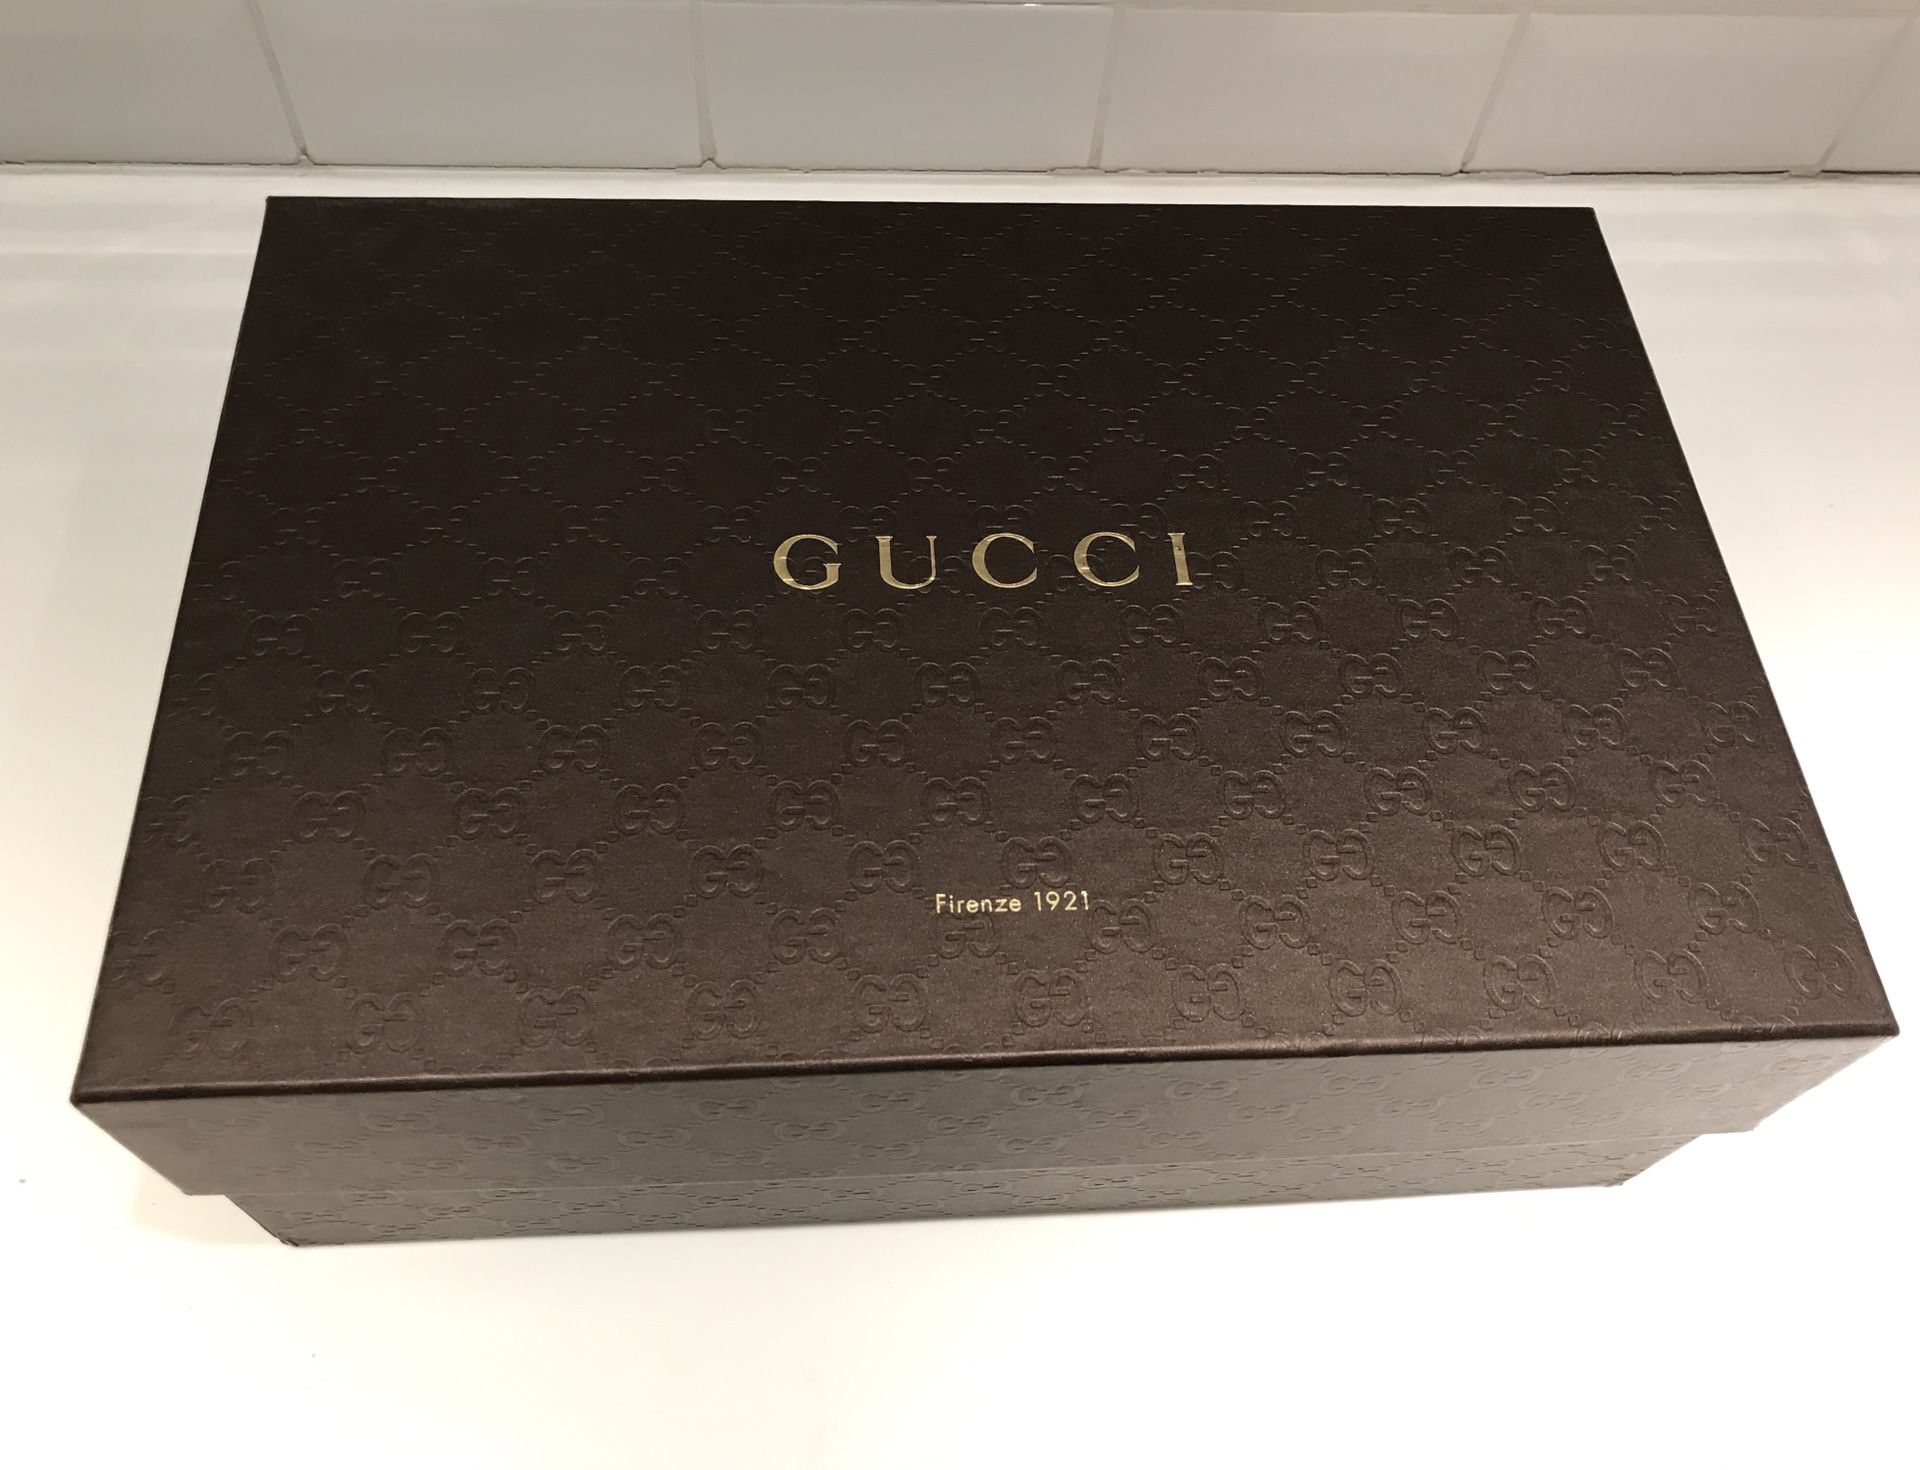 Gucci Shoe Box on Behance